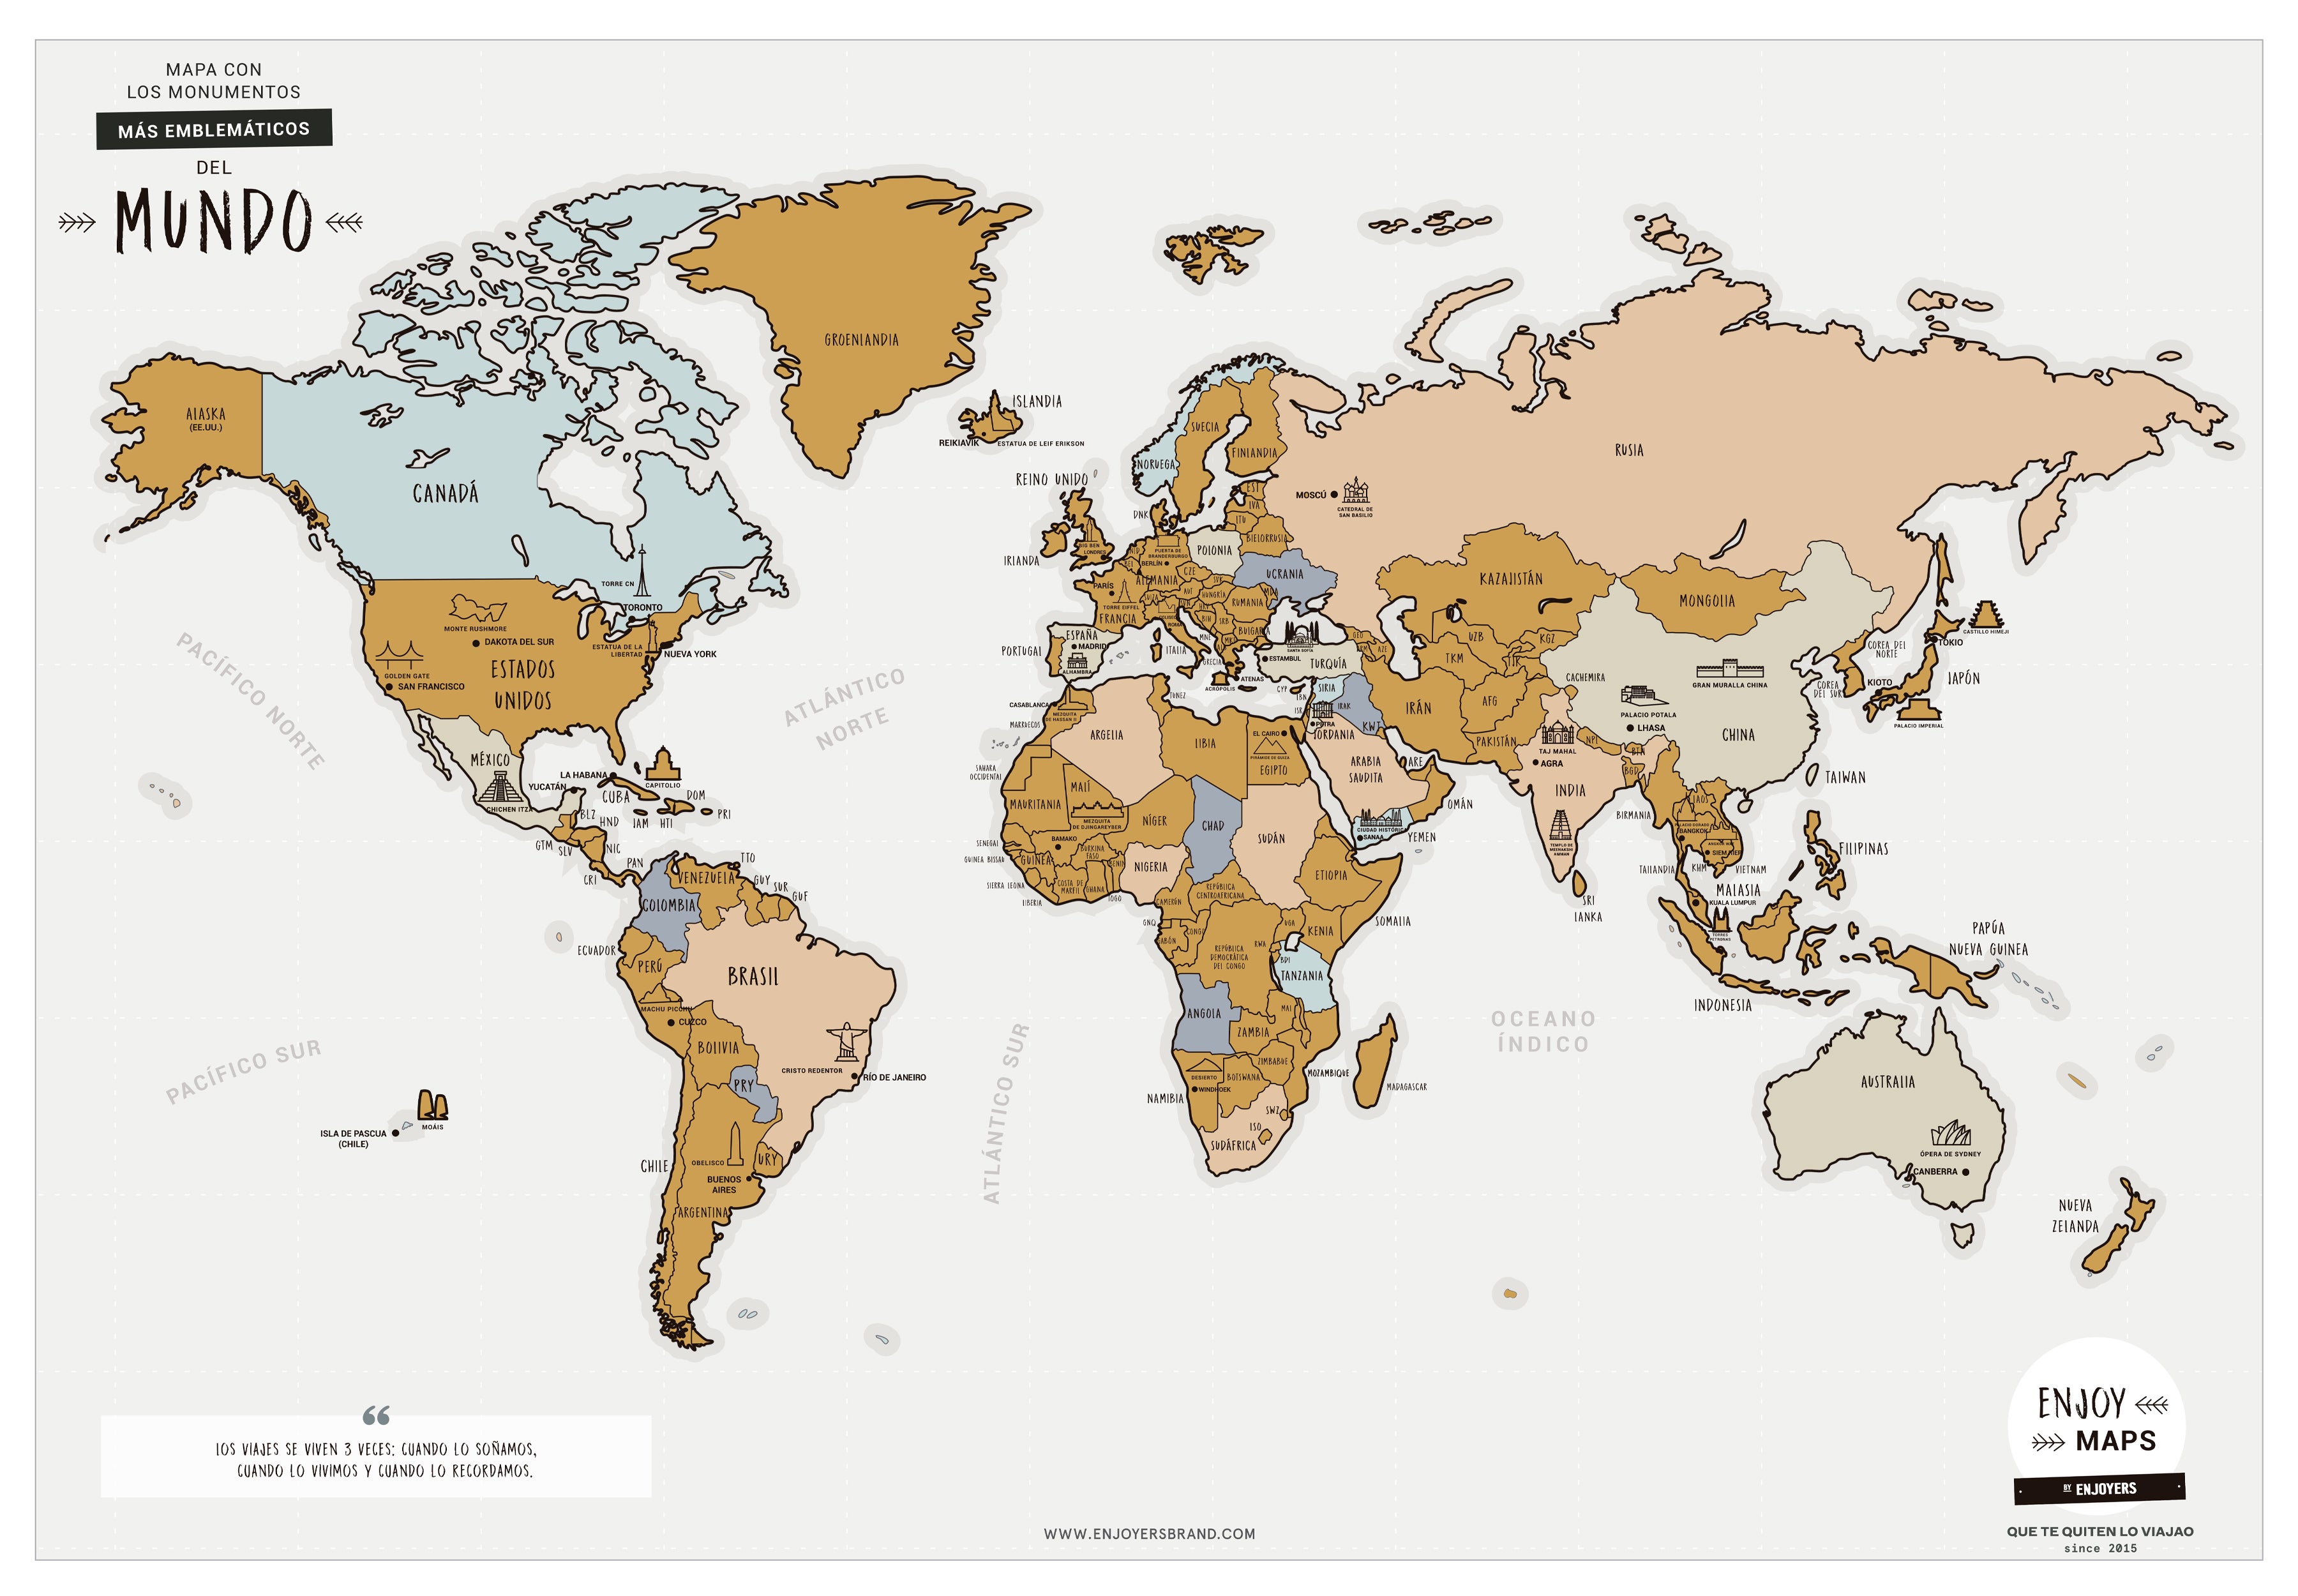 Mapa mundi para rascar los países 82x56 cm (dorado) 